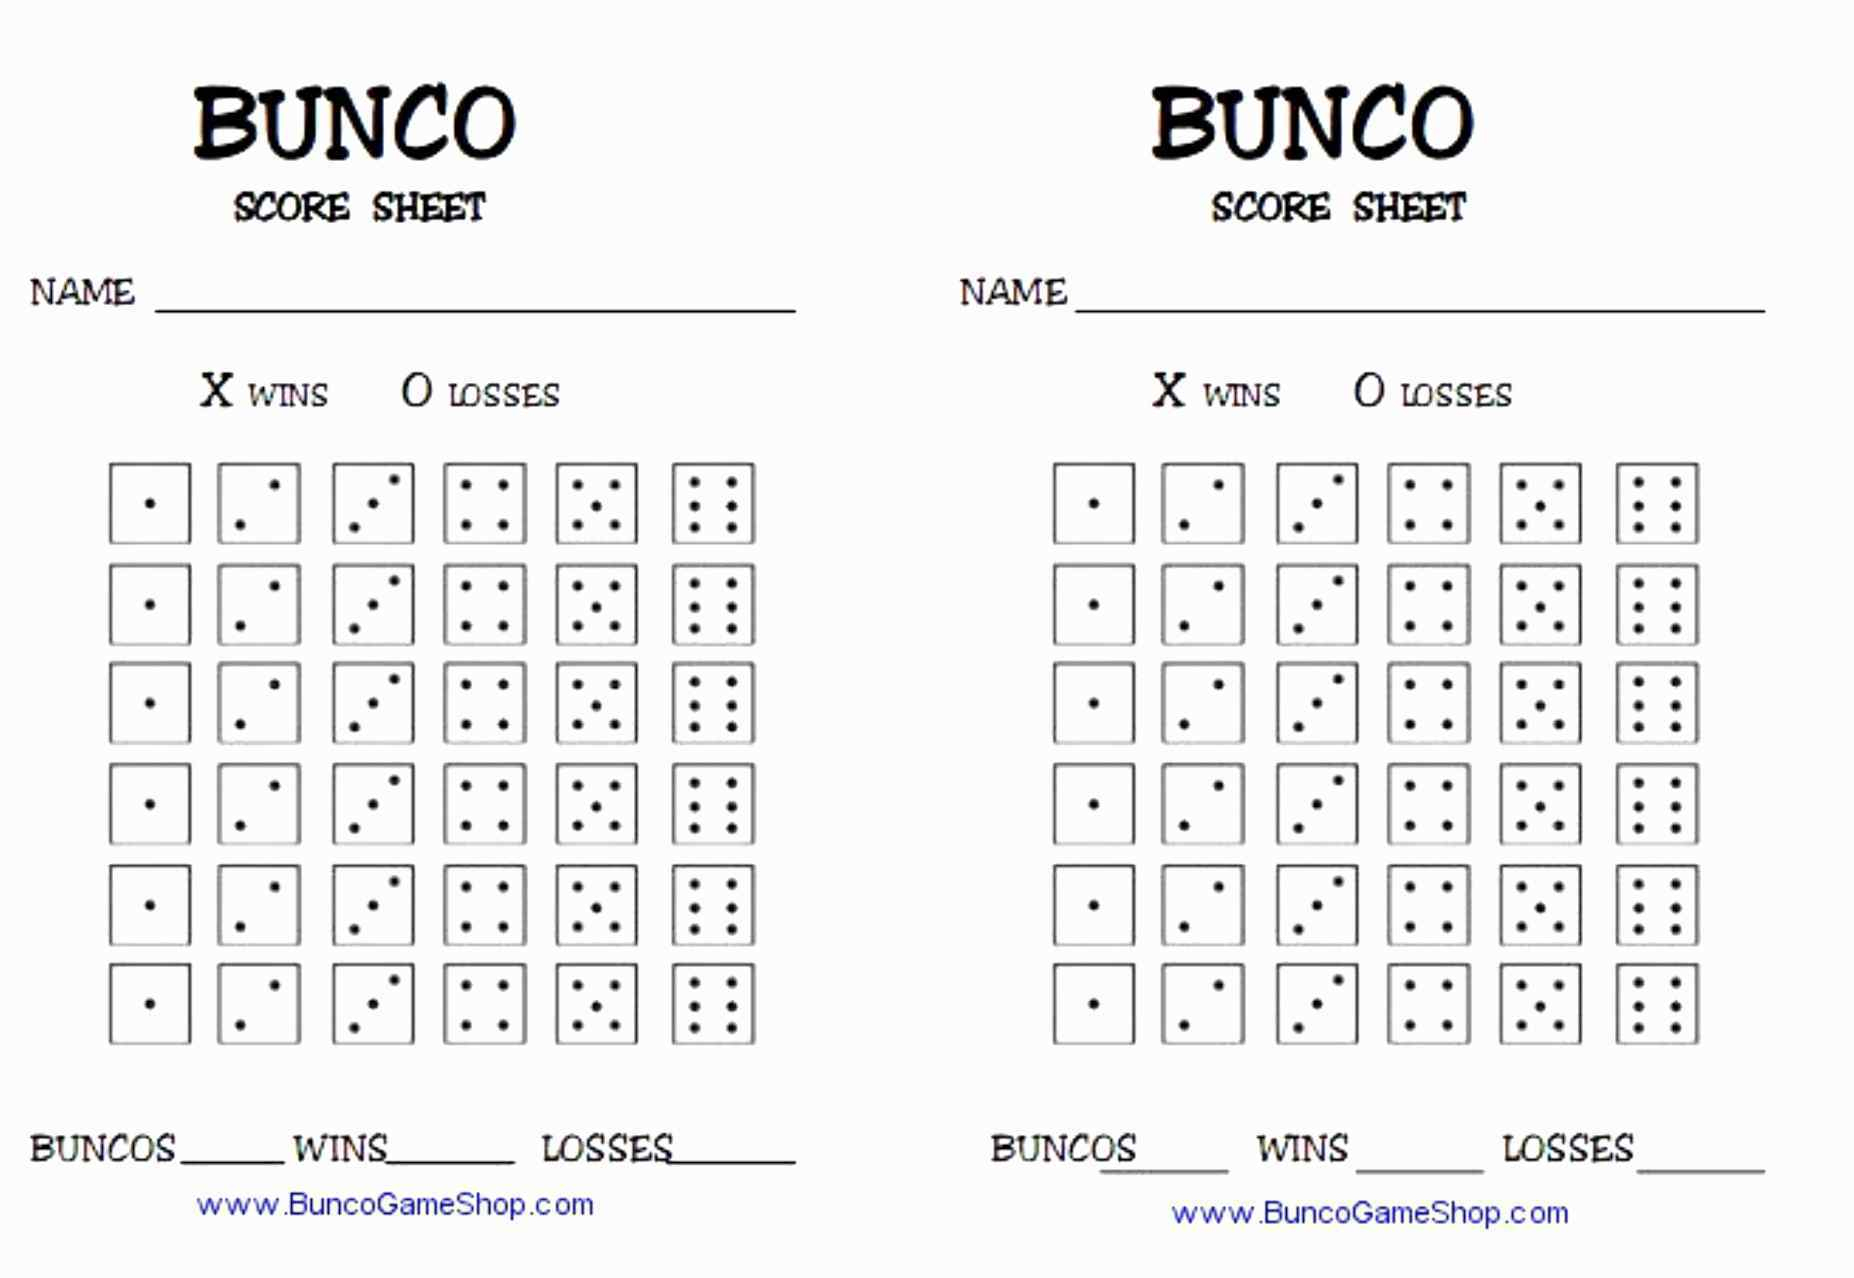 Bunco score sheets free printable